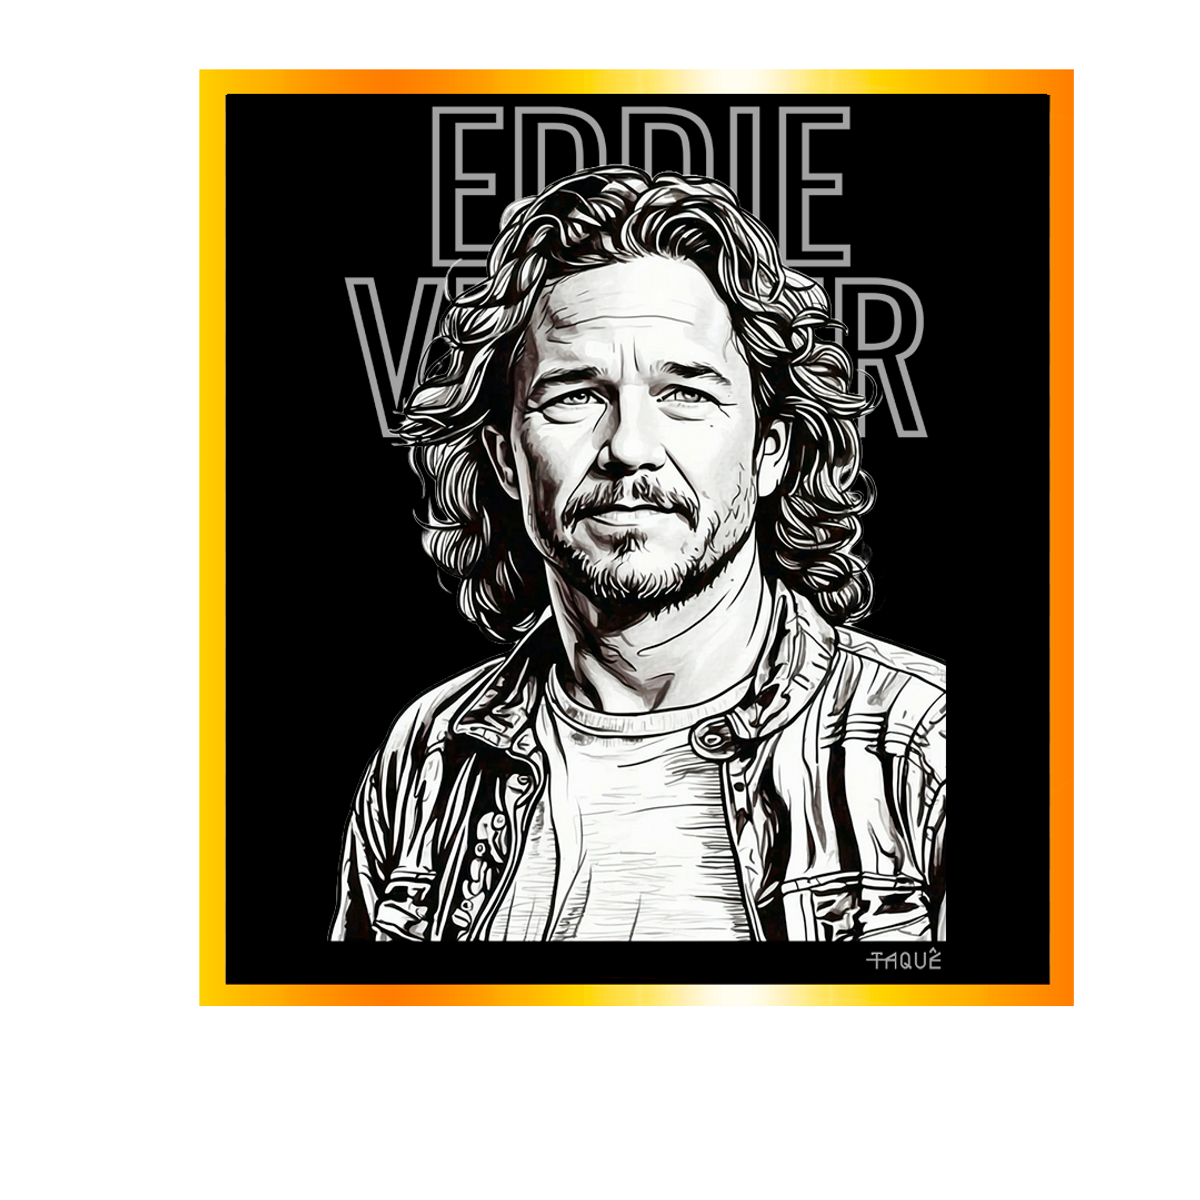 Nome do produto: Camiseta Taquê Lendas - Eddie Vedder